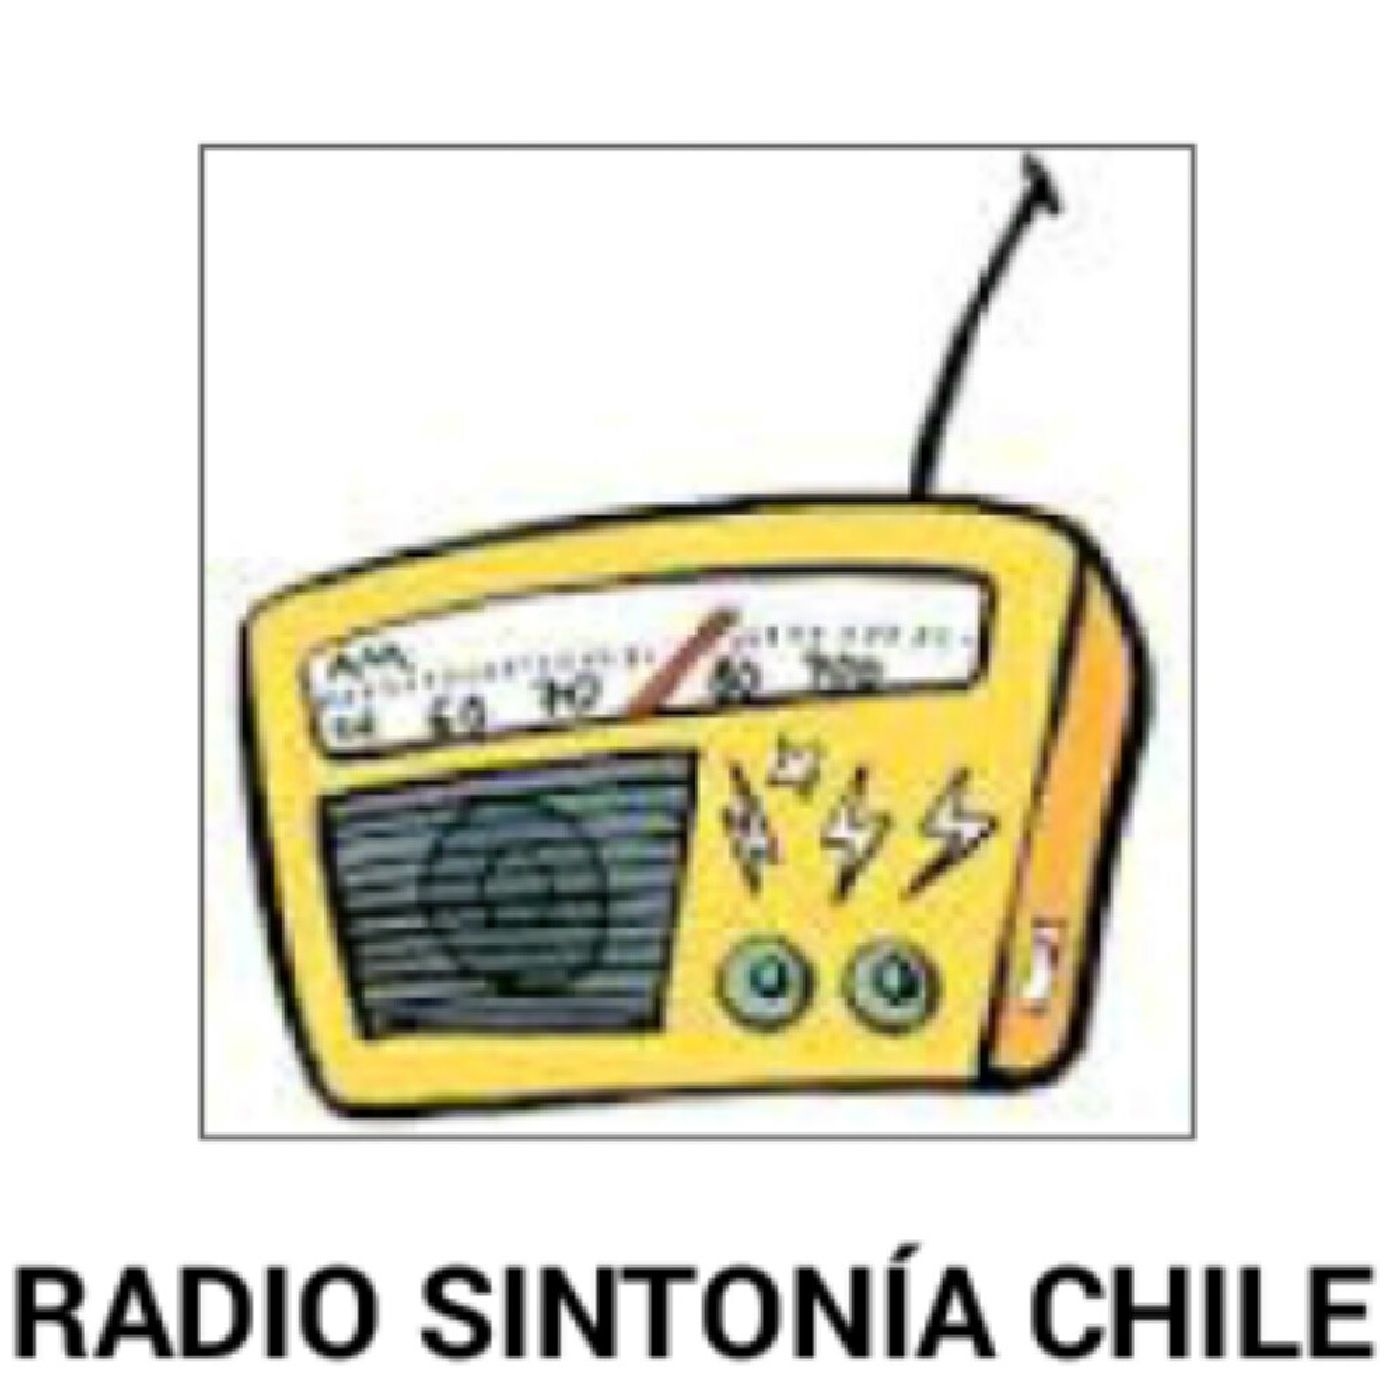 RADIO SINTONÍA CHILE's tracks